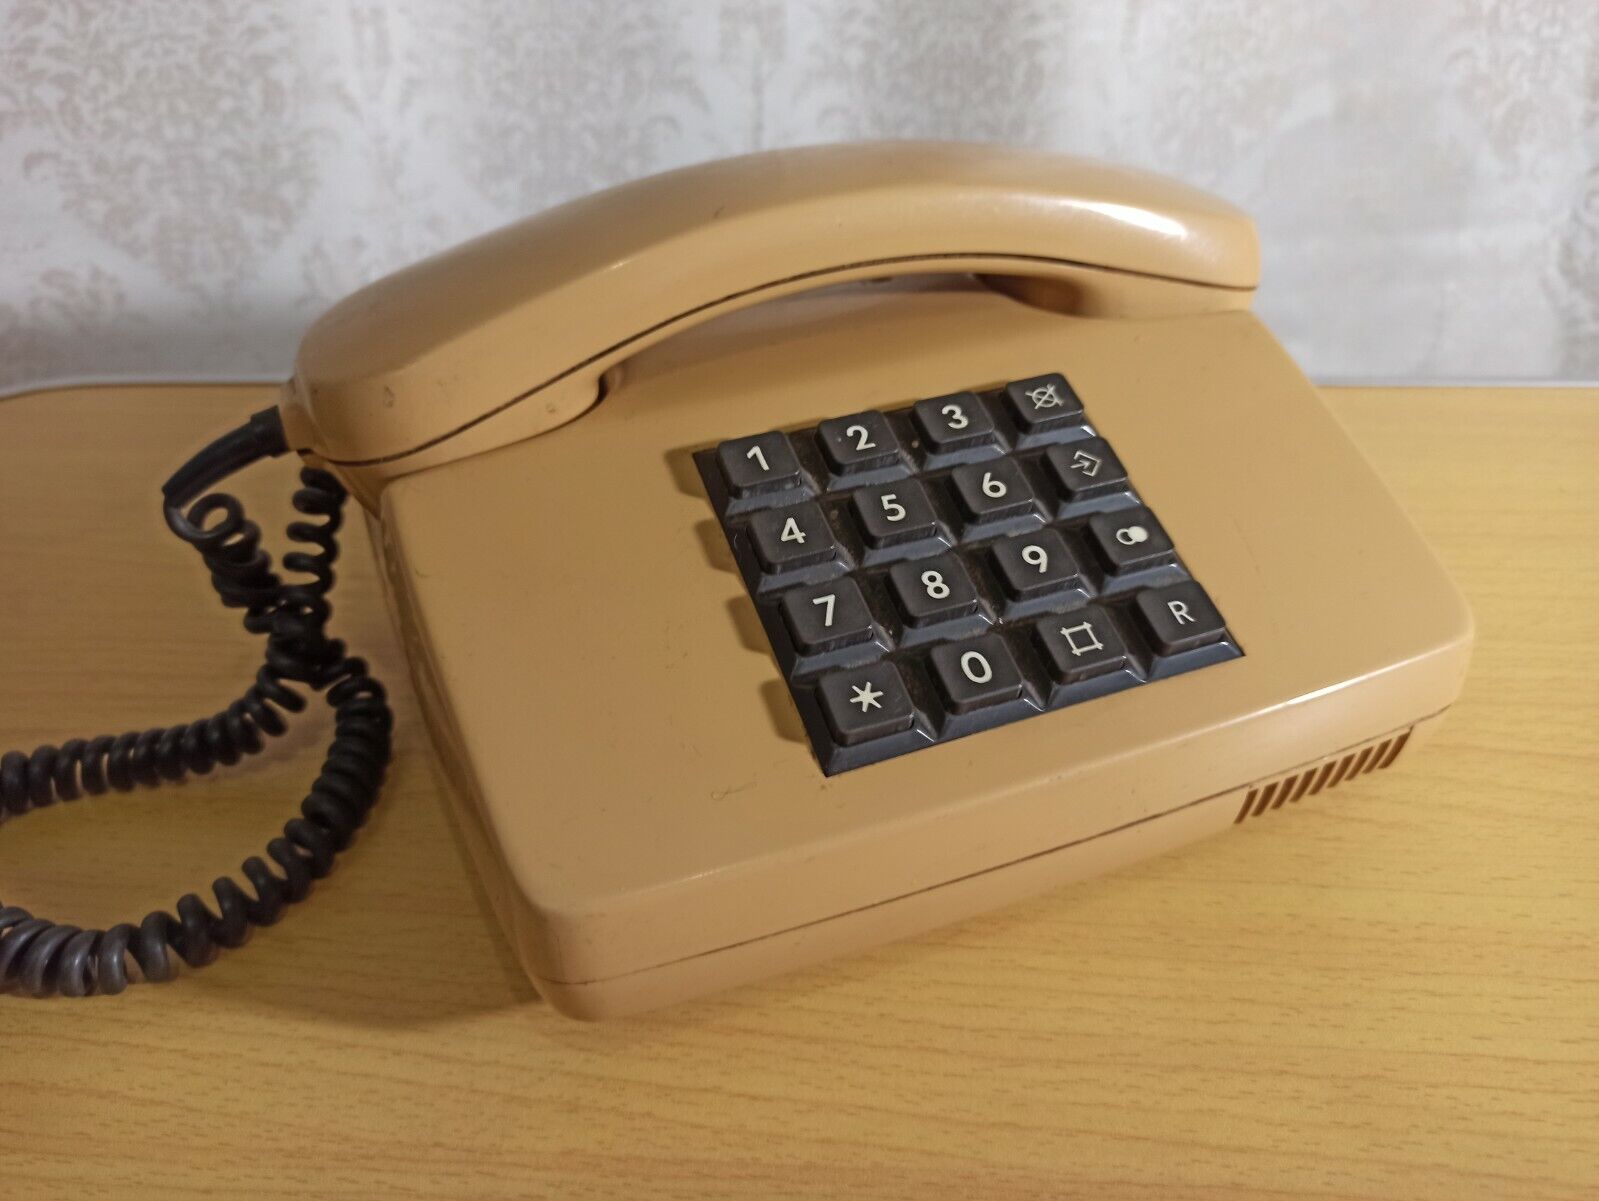  Vintage push-button telephone Siemens 1989